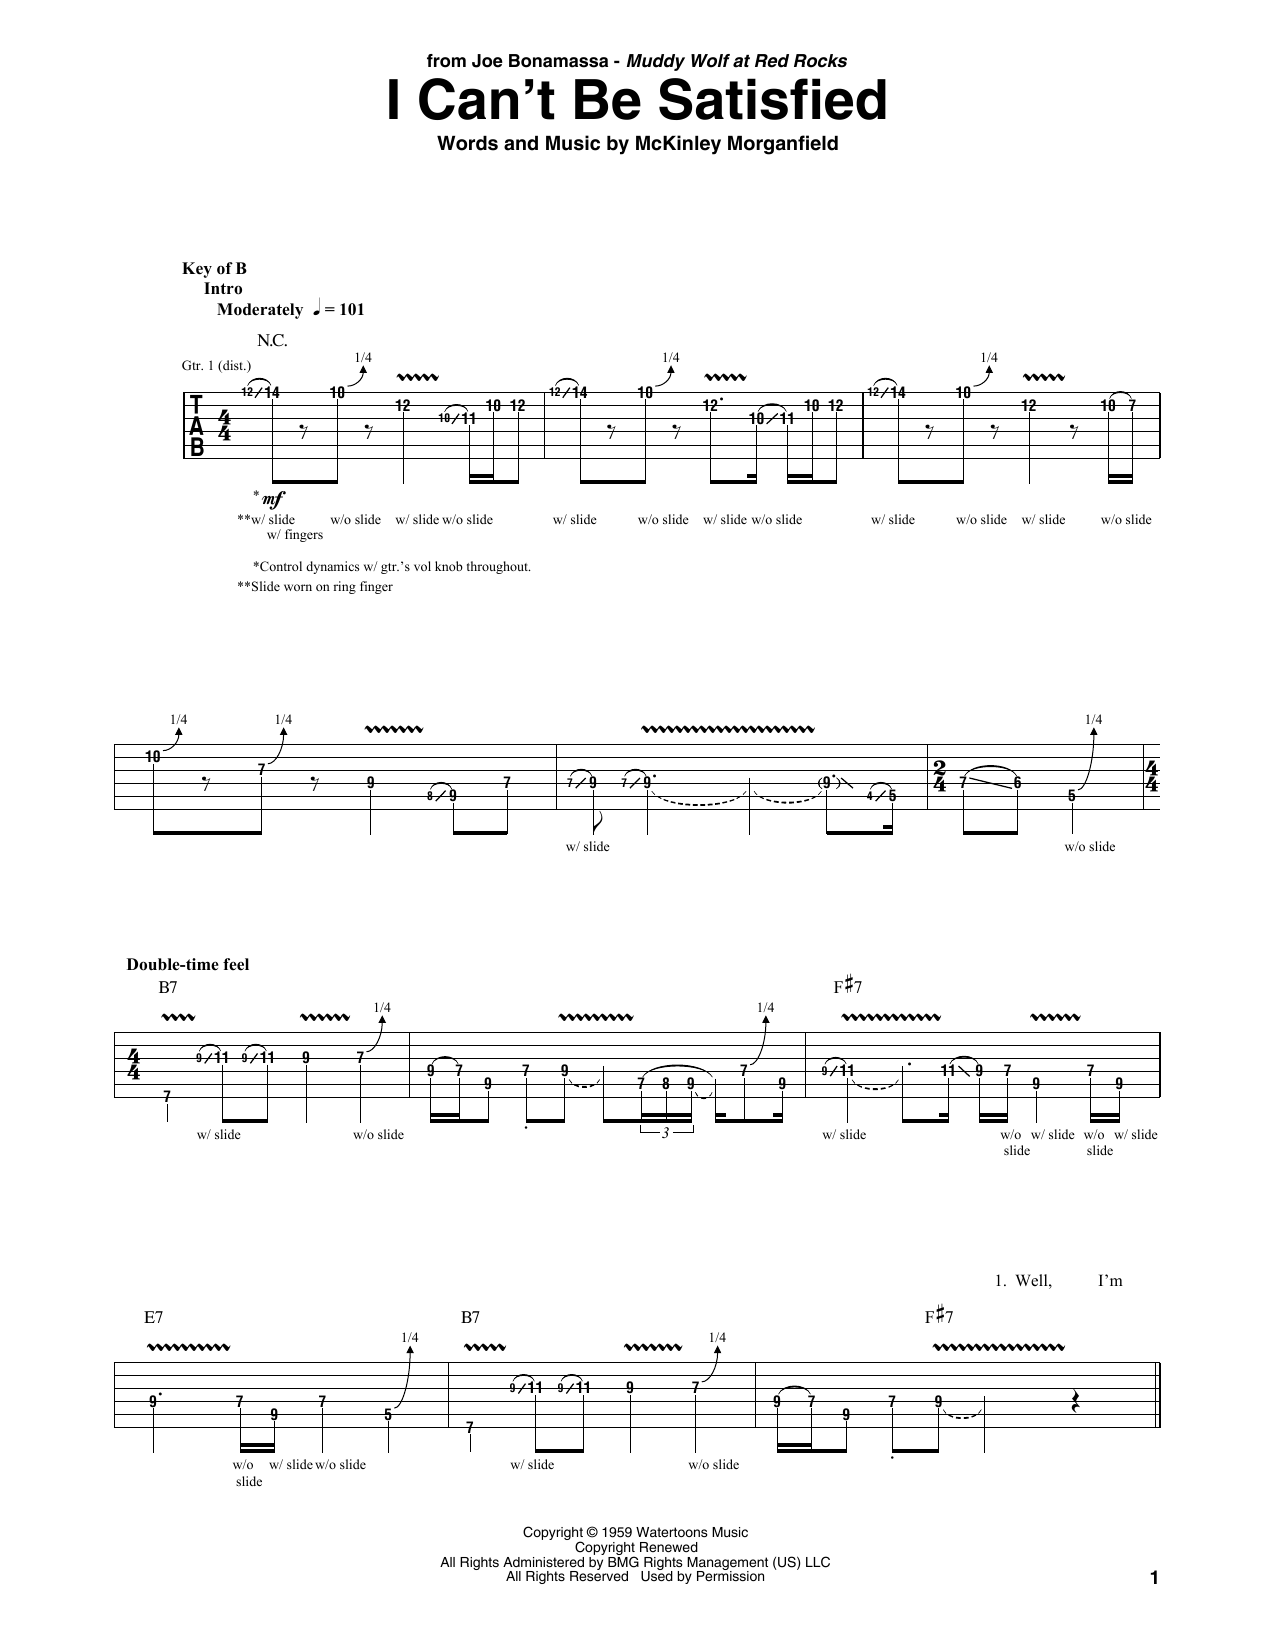 Joe Bonamassa I Can't Be Satisfied Sheet Music Notes & Chords for Guitar Tab - Download or Print PDF